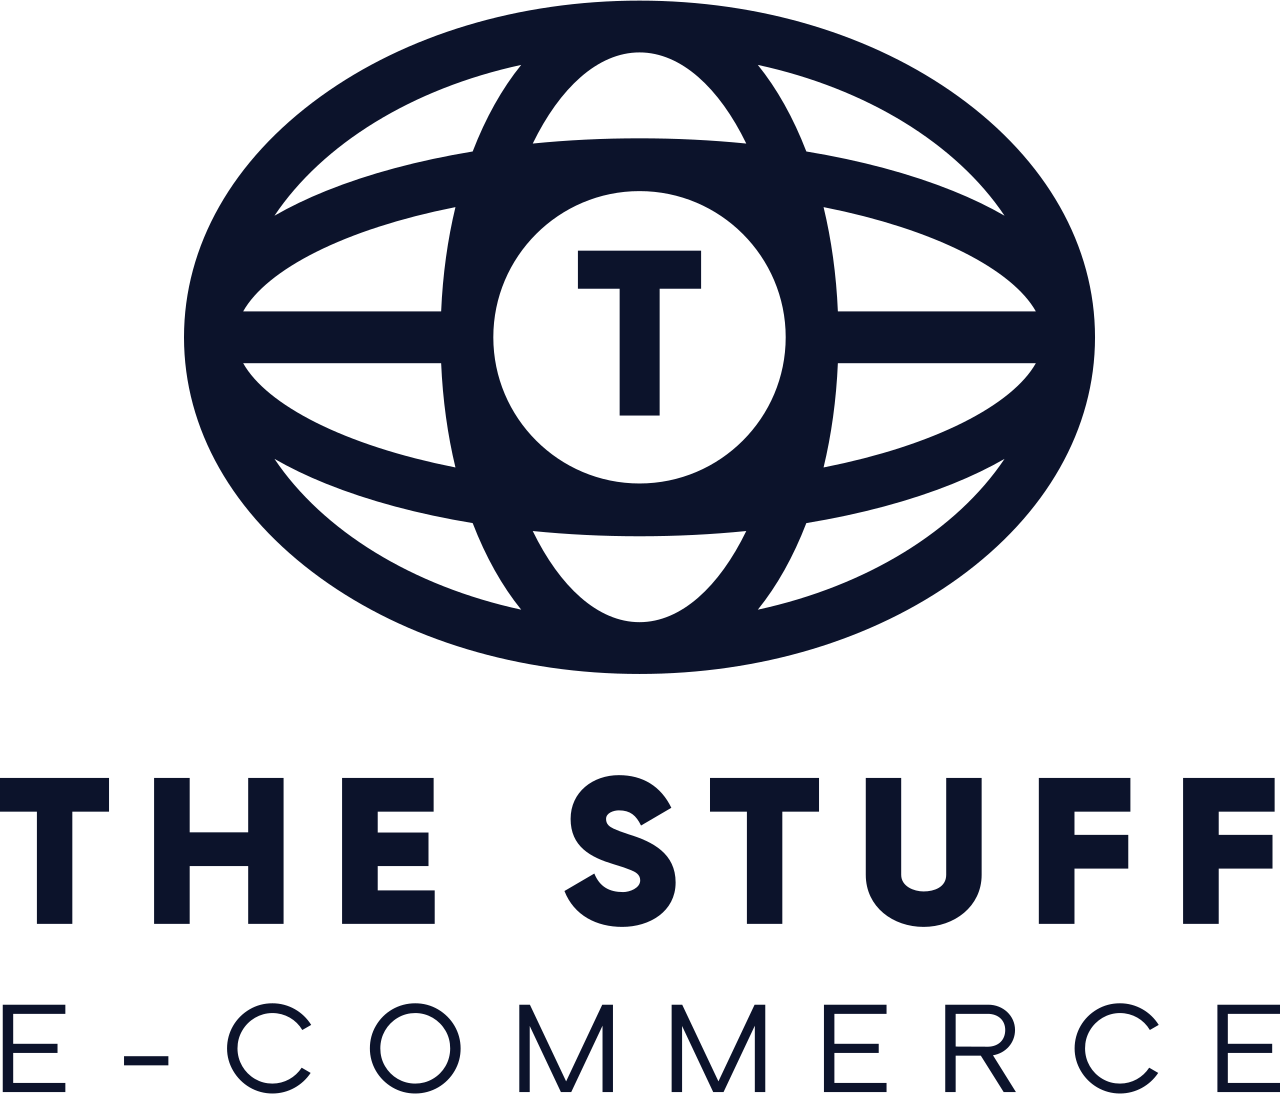 The stuff's logo